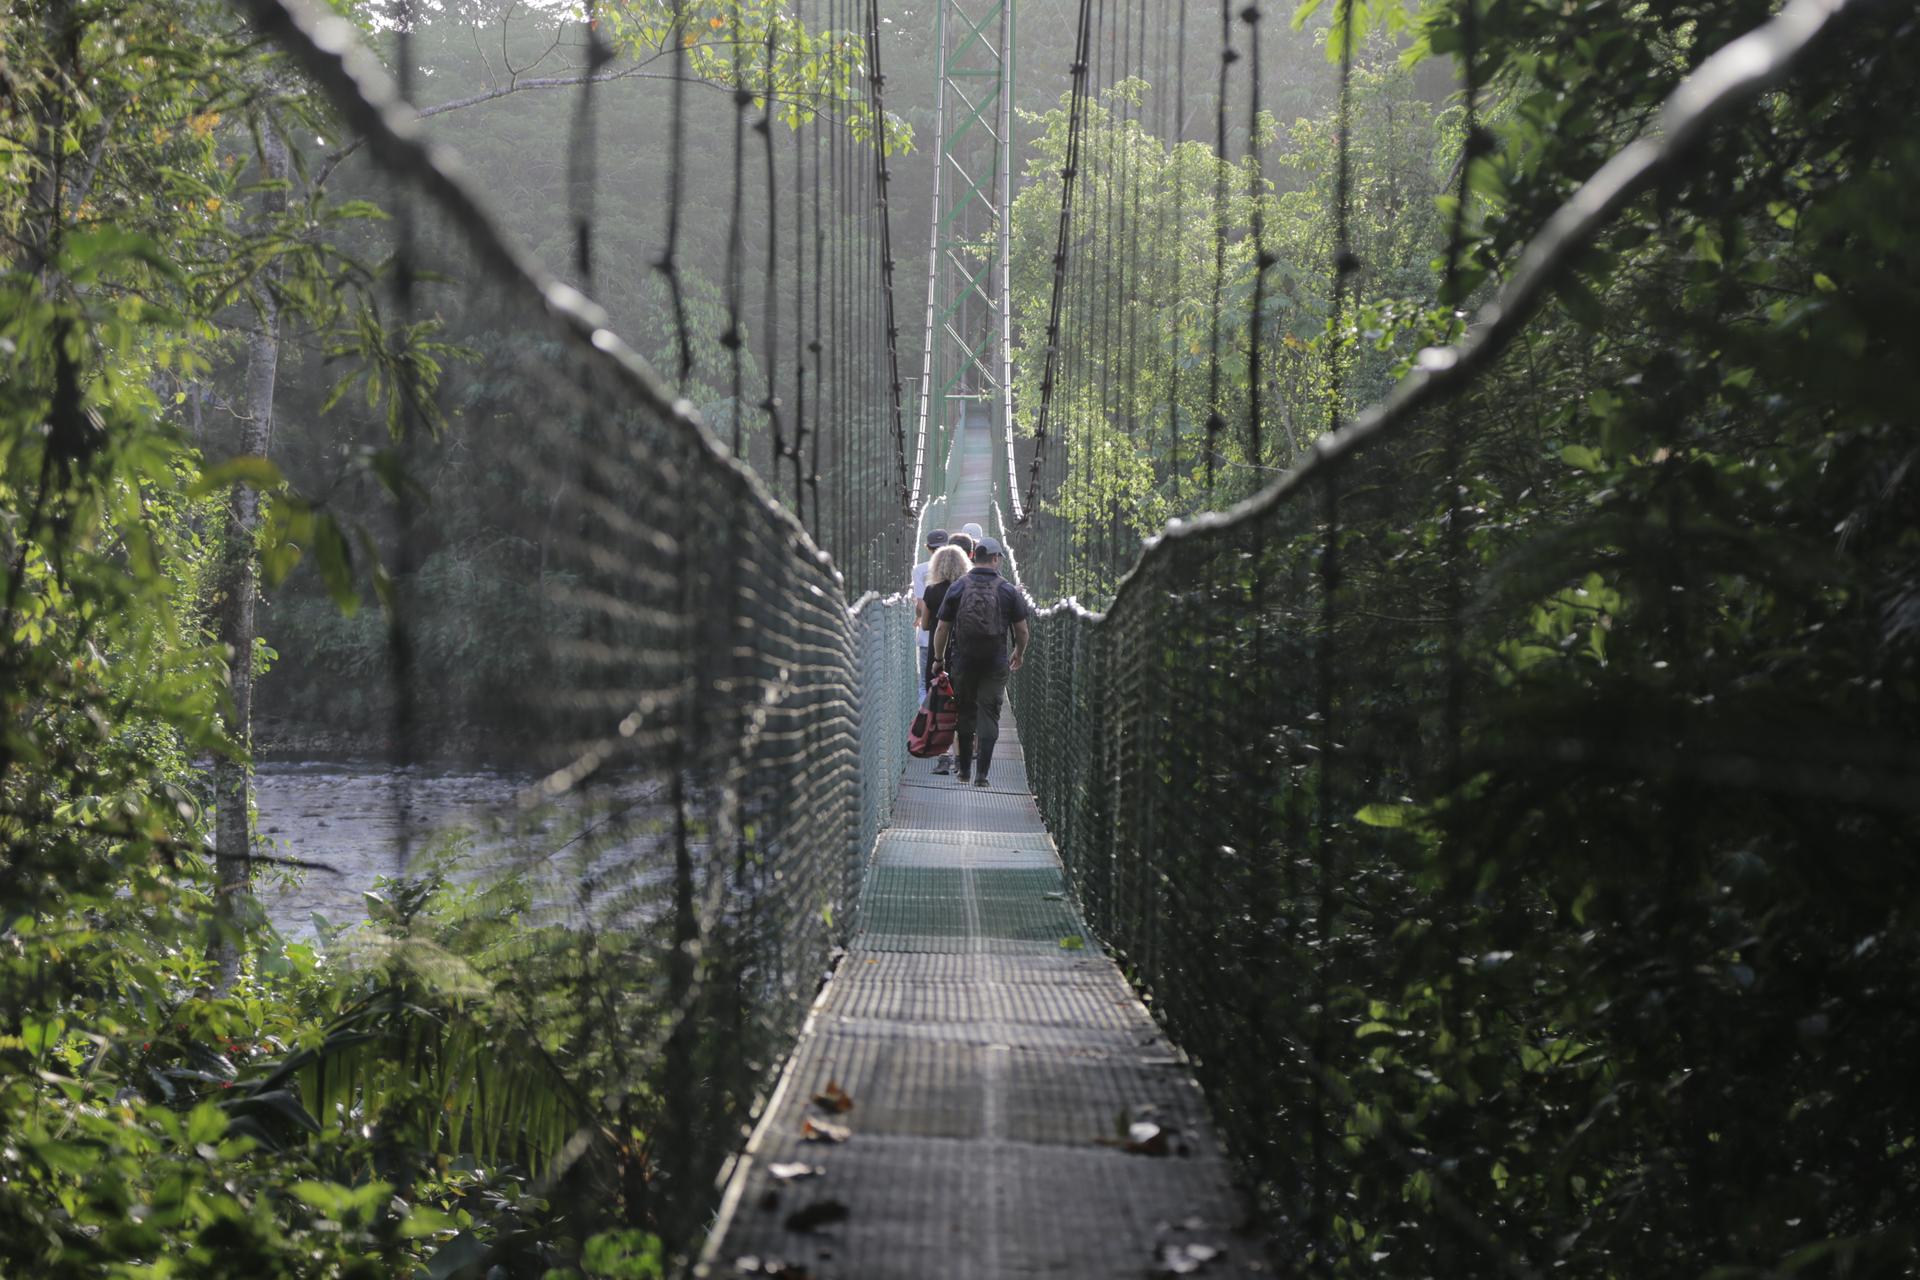 The privately-run Tirimbina Biological Reserve boasts of having the longest suspension bridge in Costa Rica, nearly 1,000 feet across the rushing Sarapiquí River.